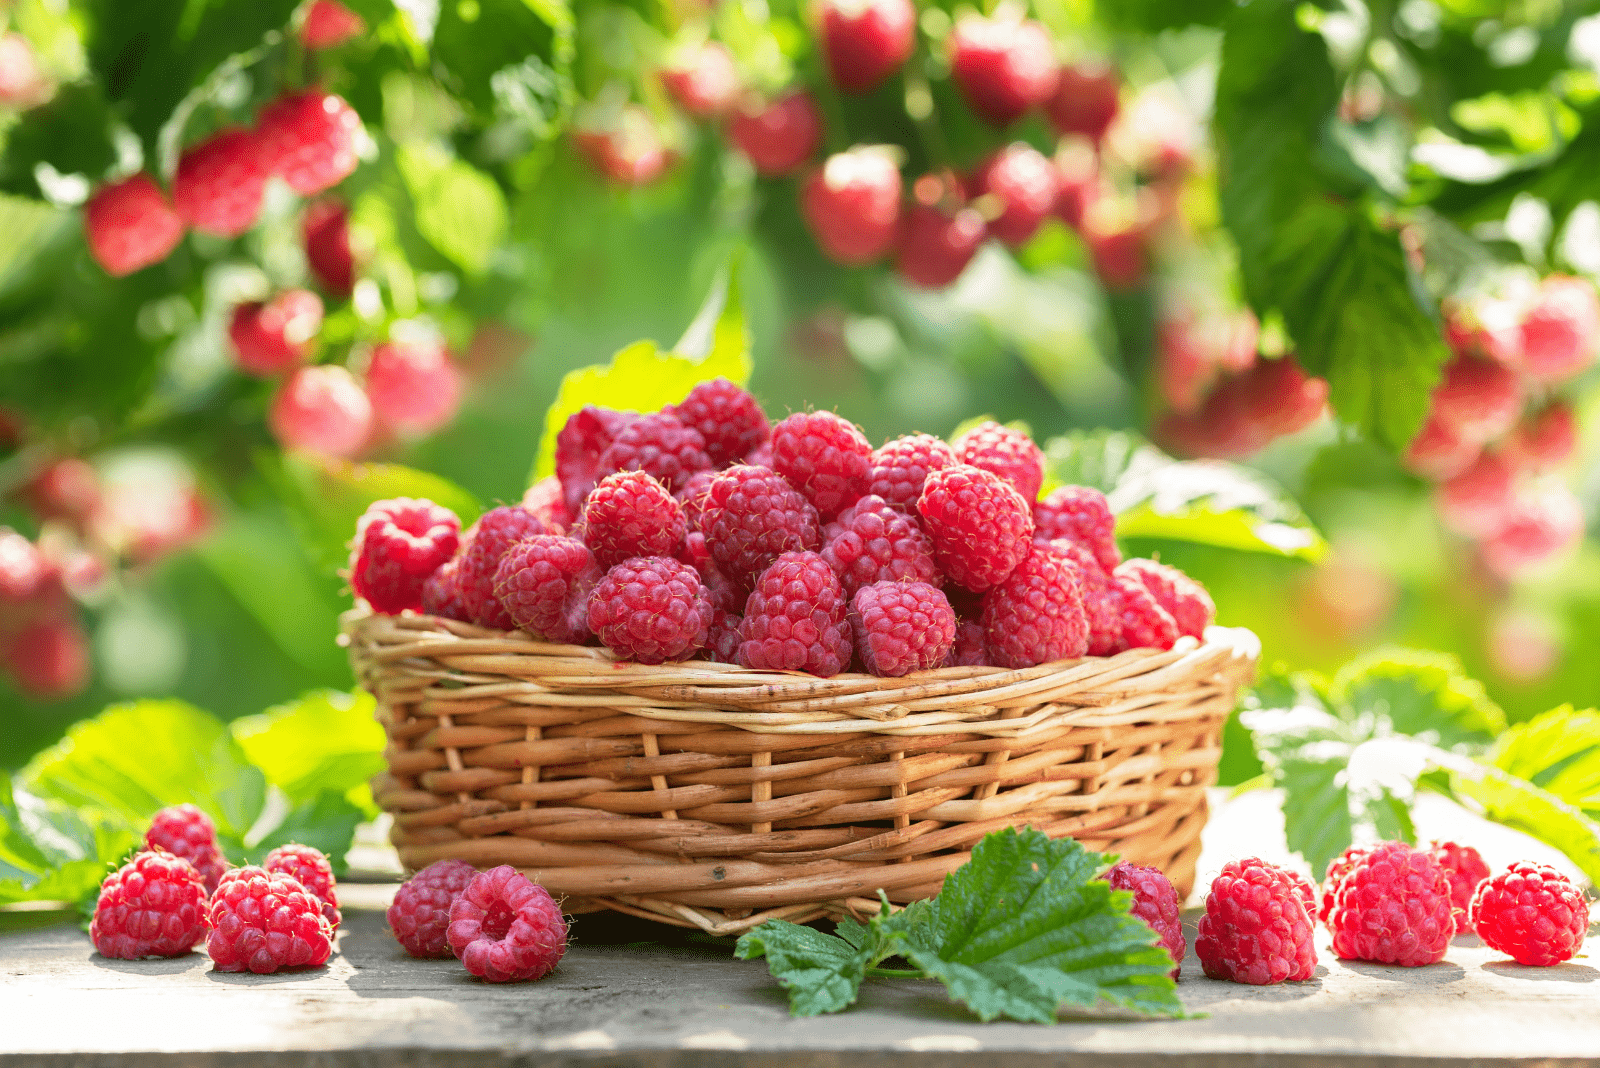 Raspberries in a basket